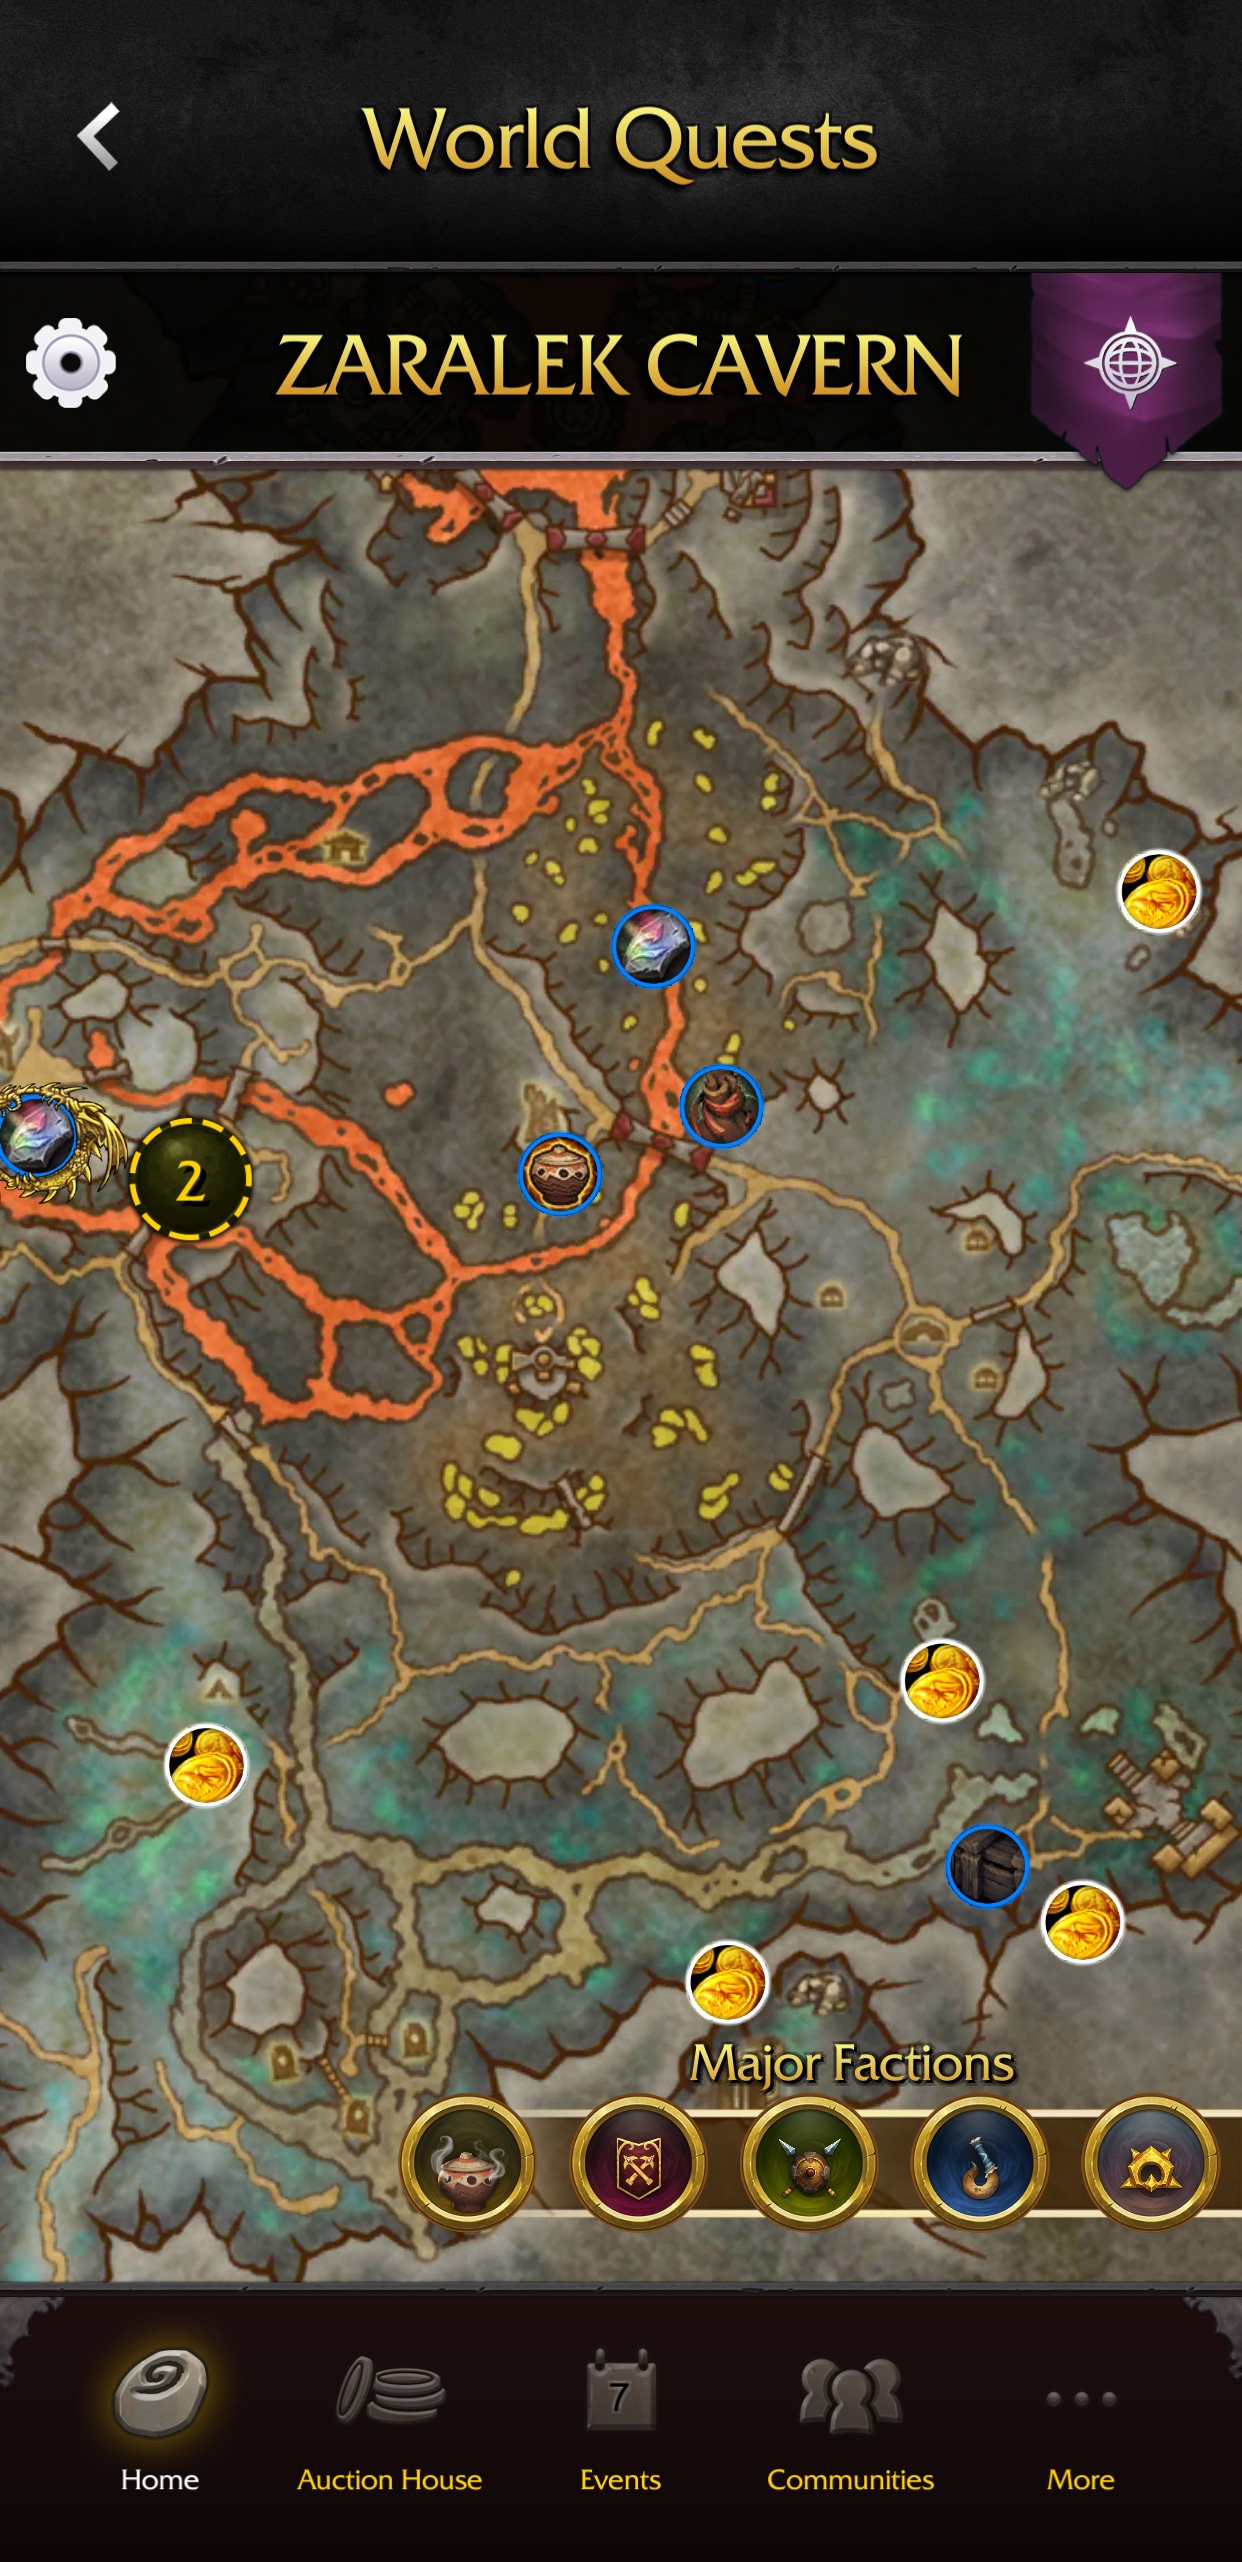 Zaralek Cavern Map Showing Major Faction Quest Locations